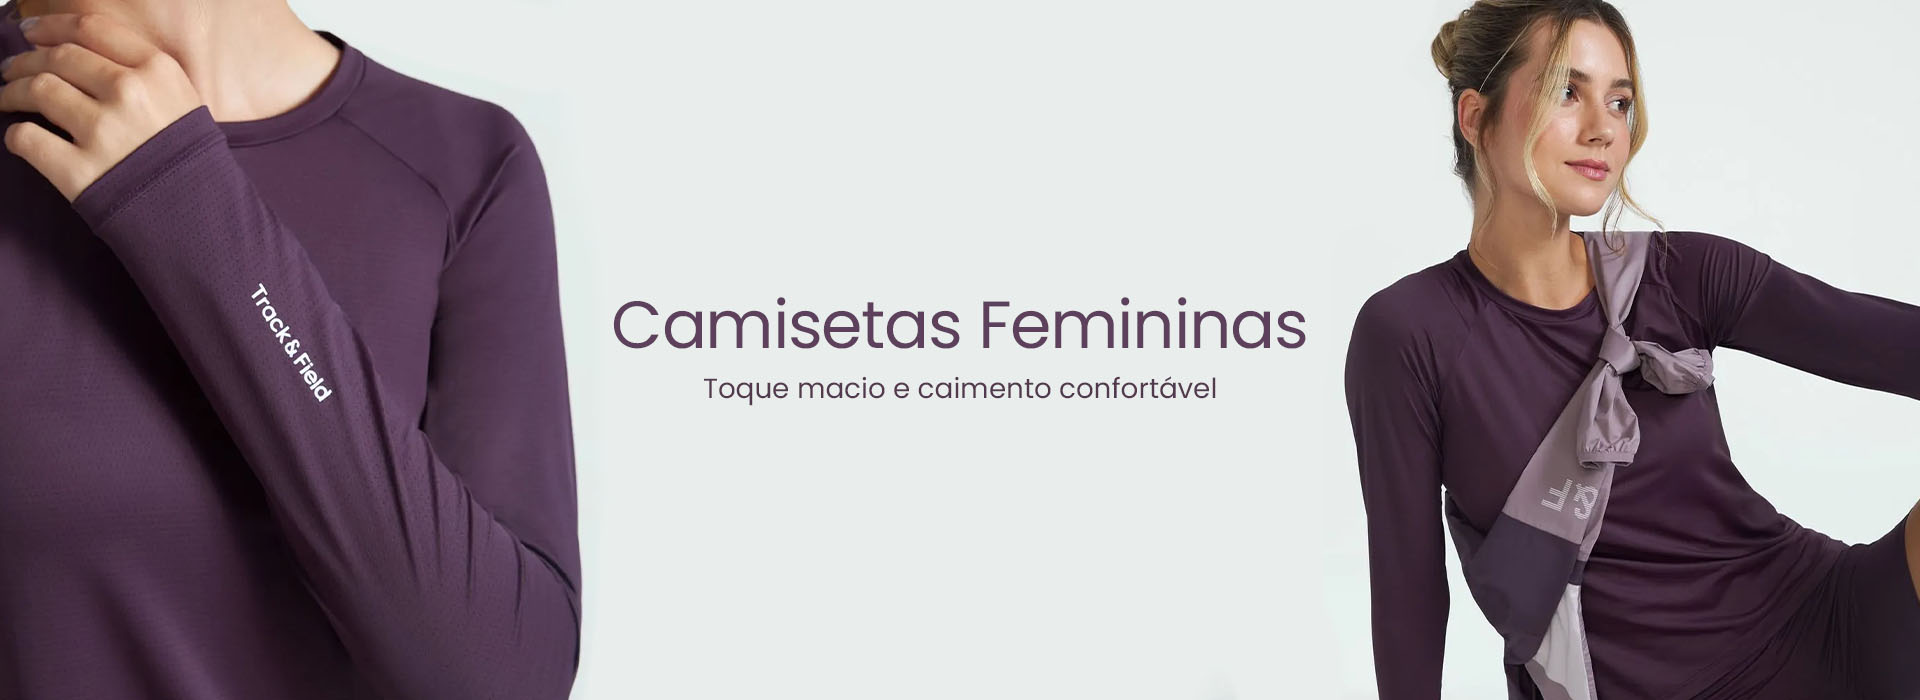 Banner Home Feminino - Camisetas Femininas